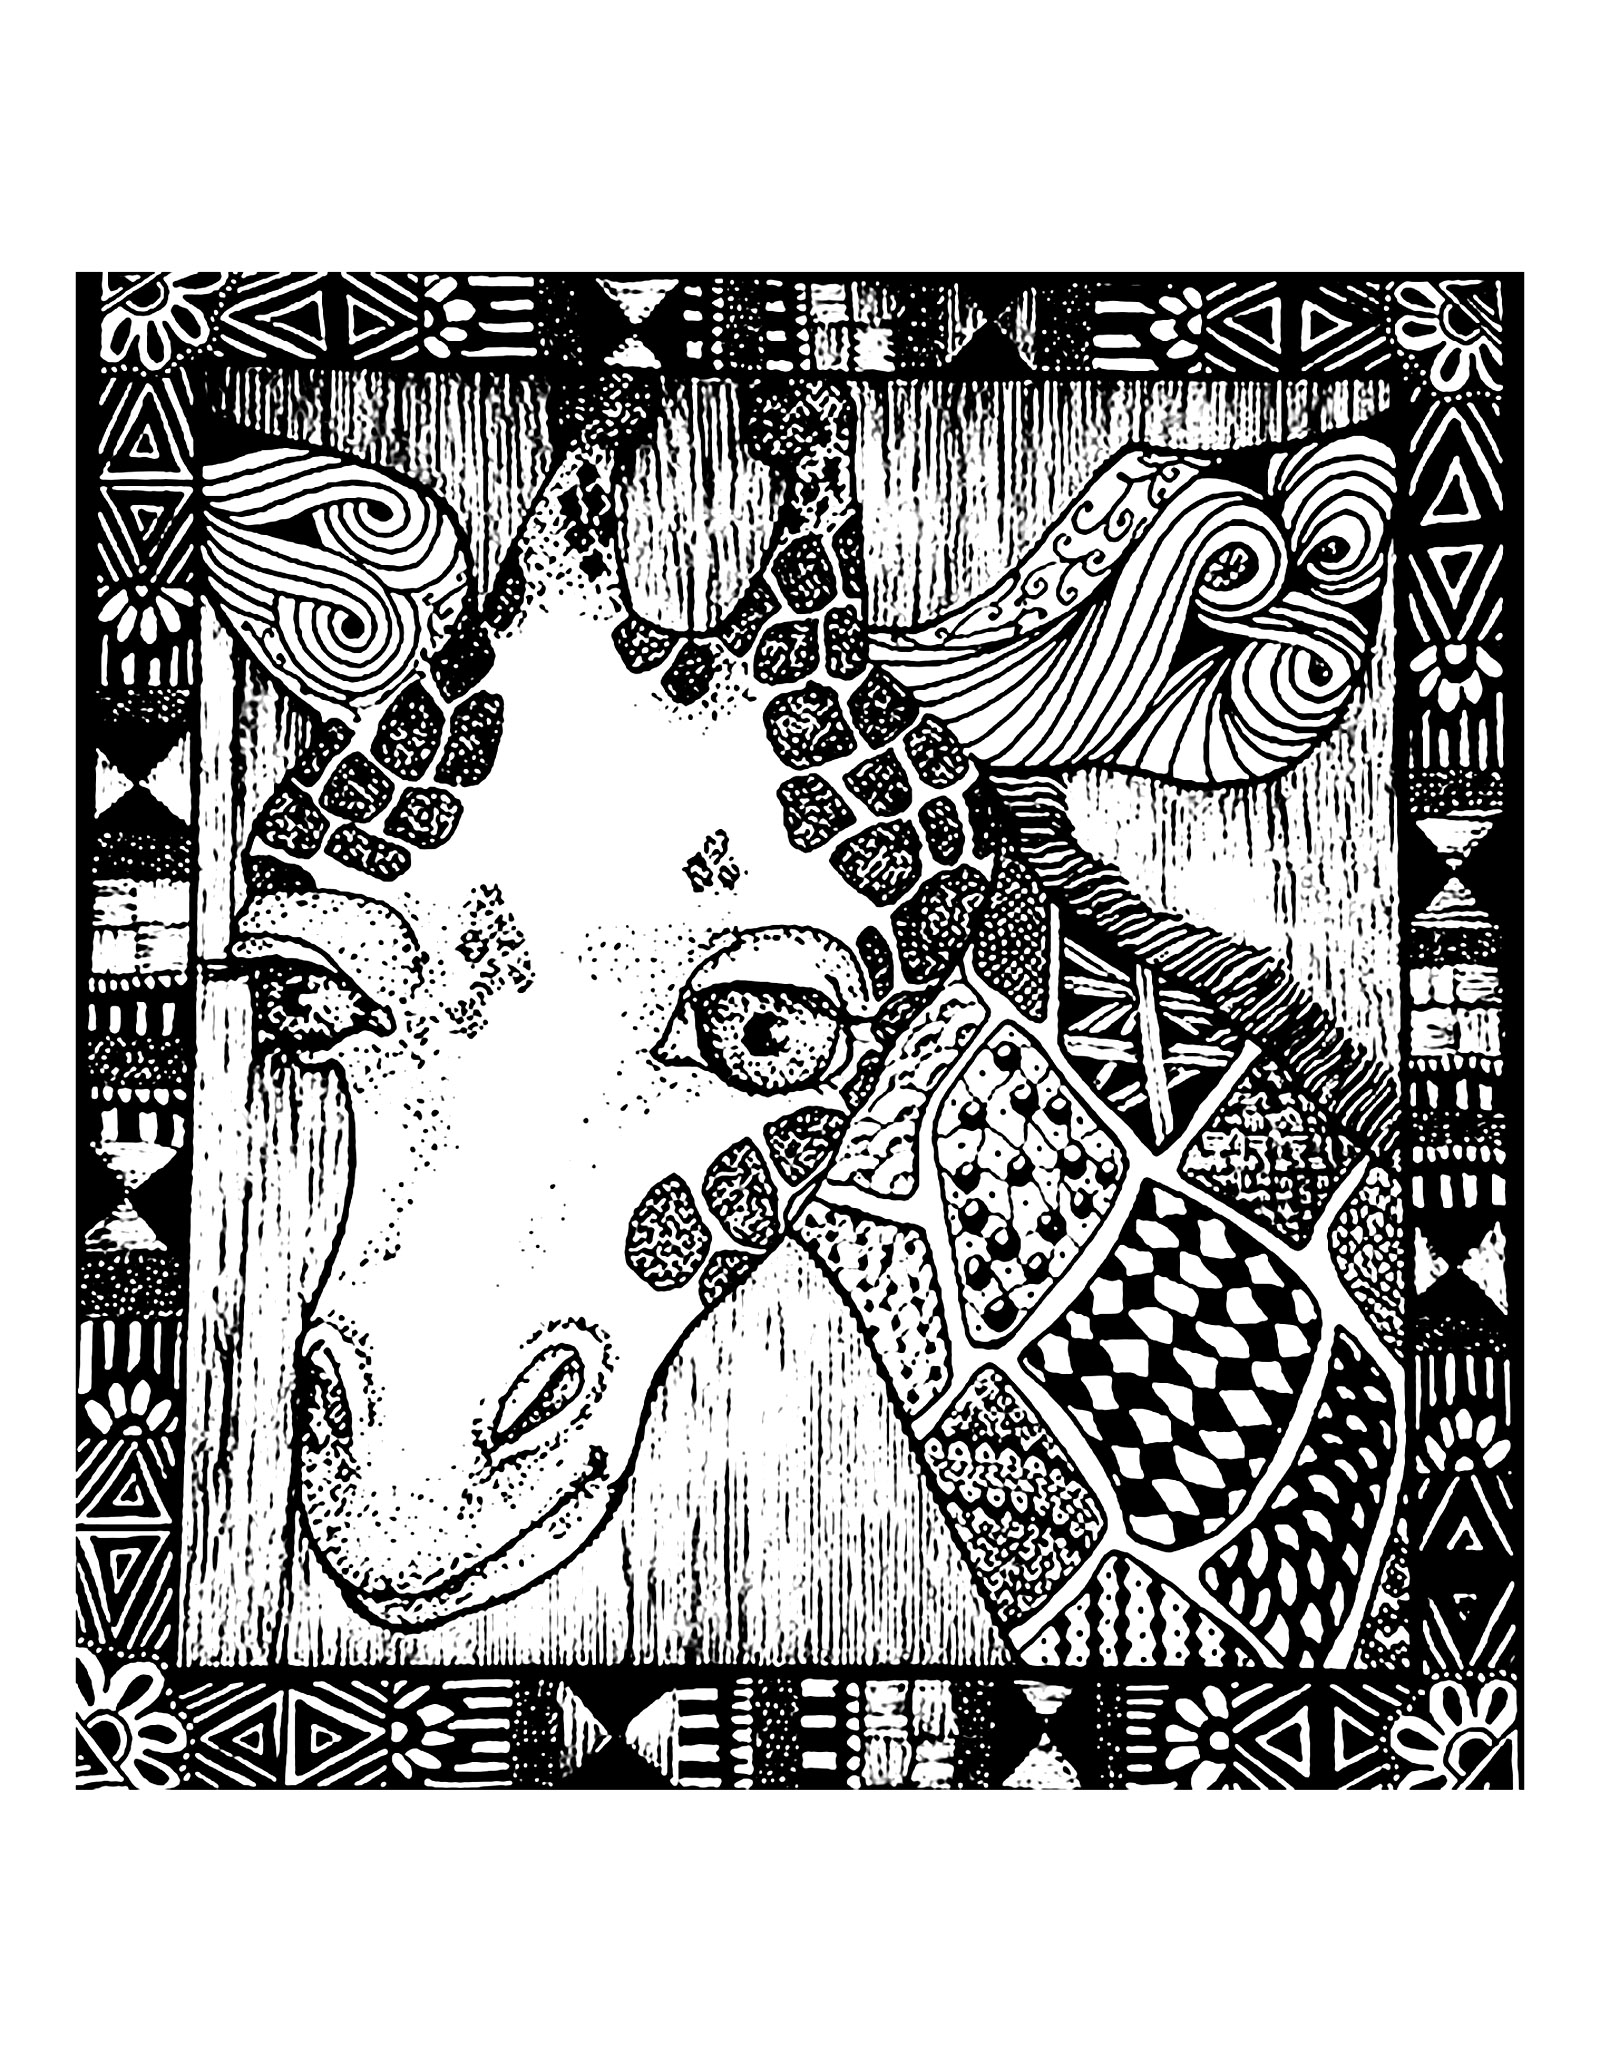 A giraffe head, with beautiful patterns